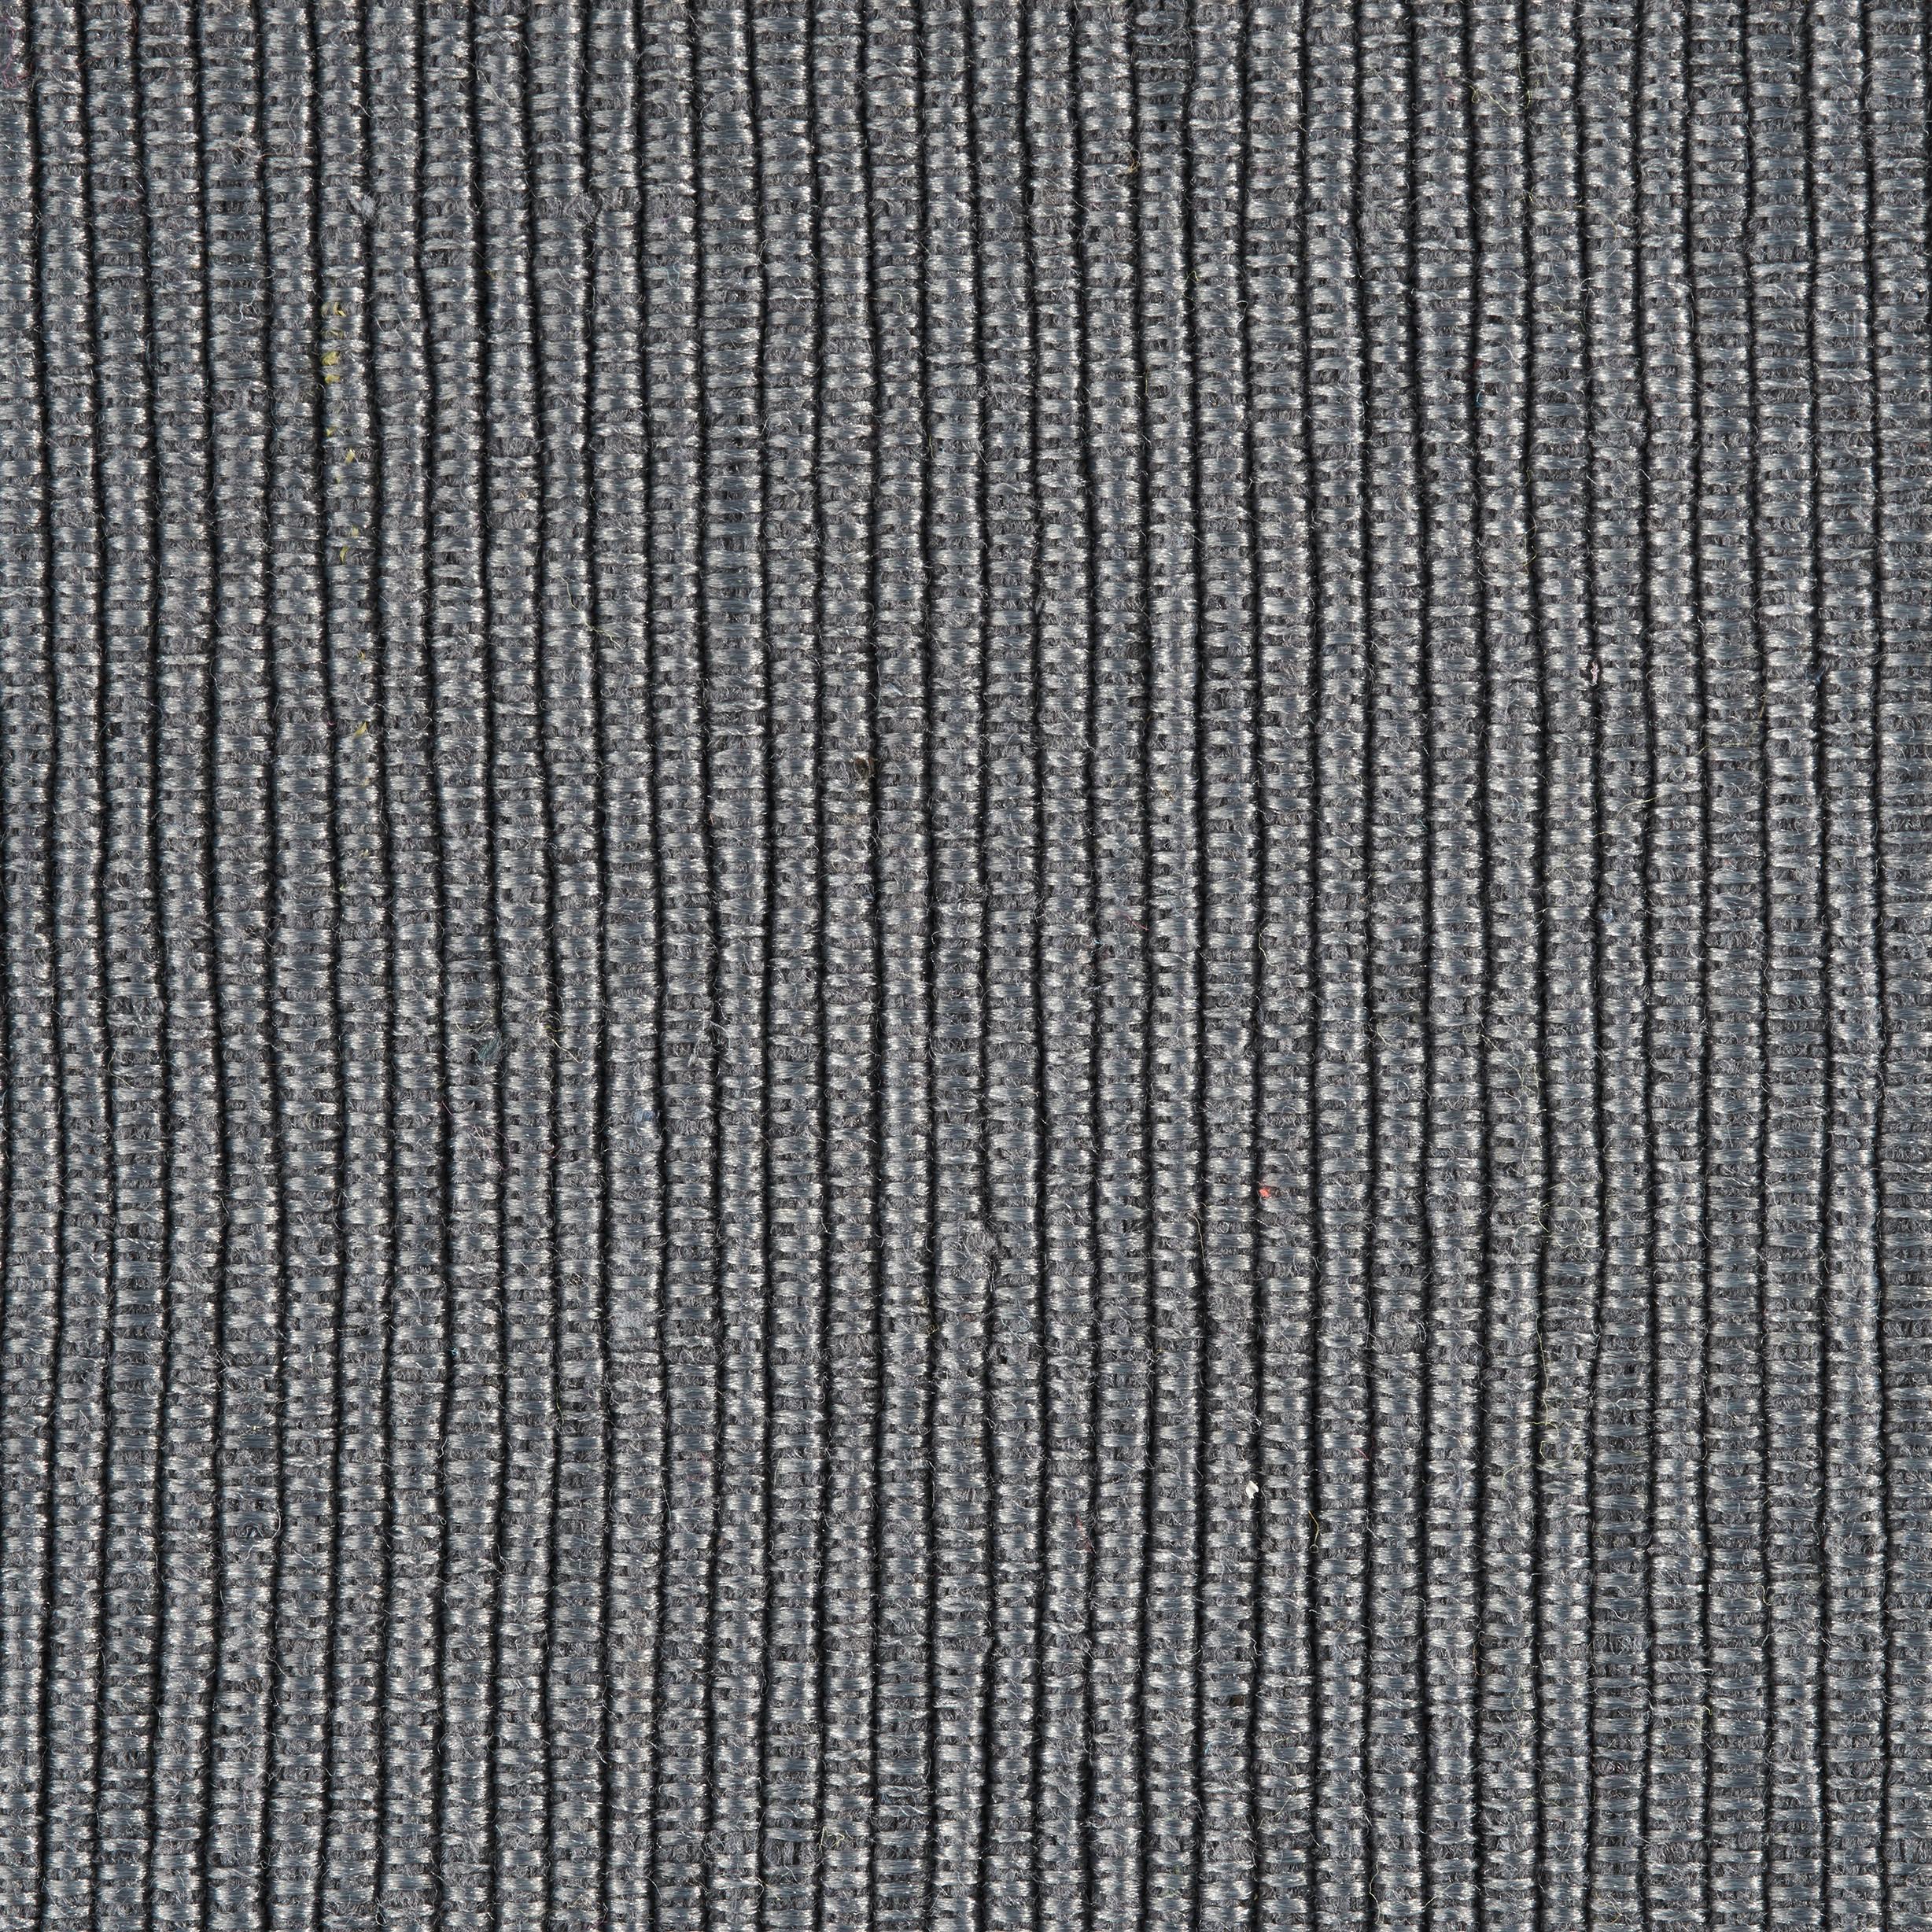 Tischset Maren Anthrazit - Anthrazit, Textil (33/45cm) - Based